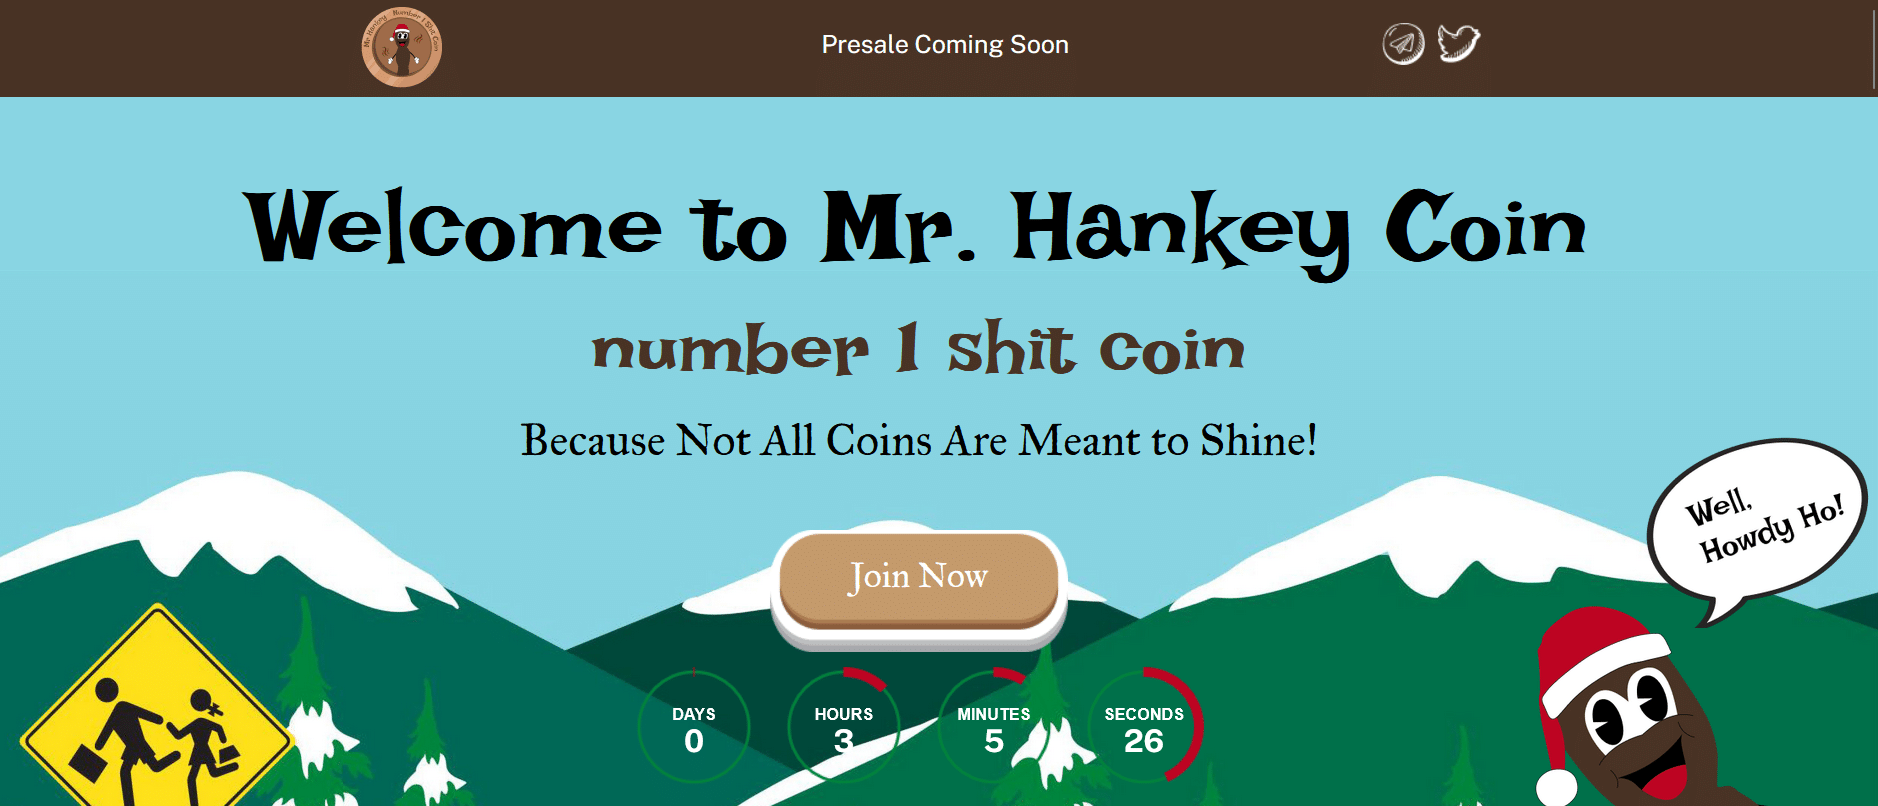 mr hankey coin homepage